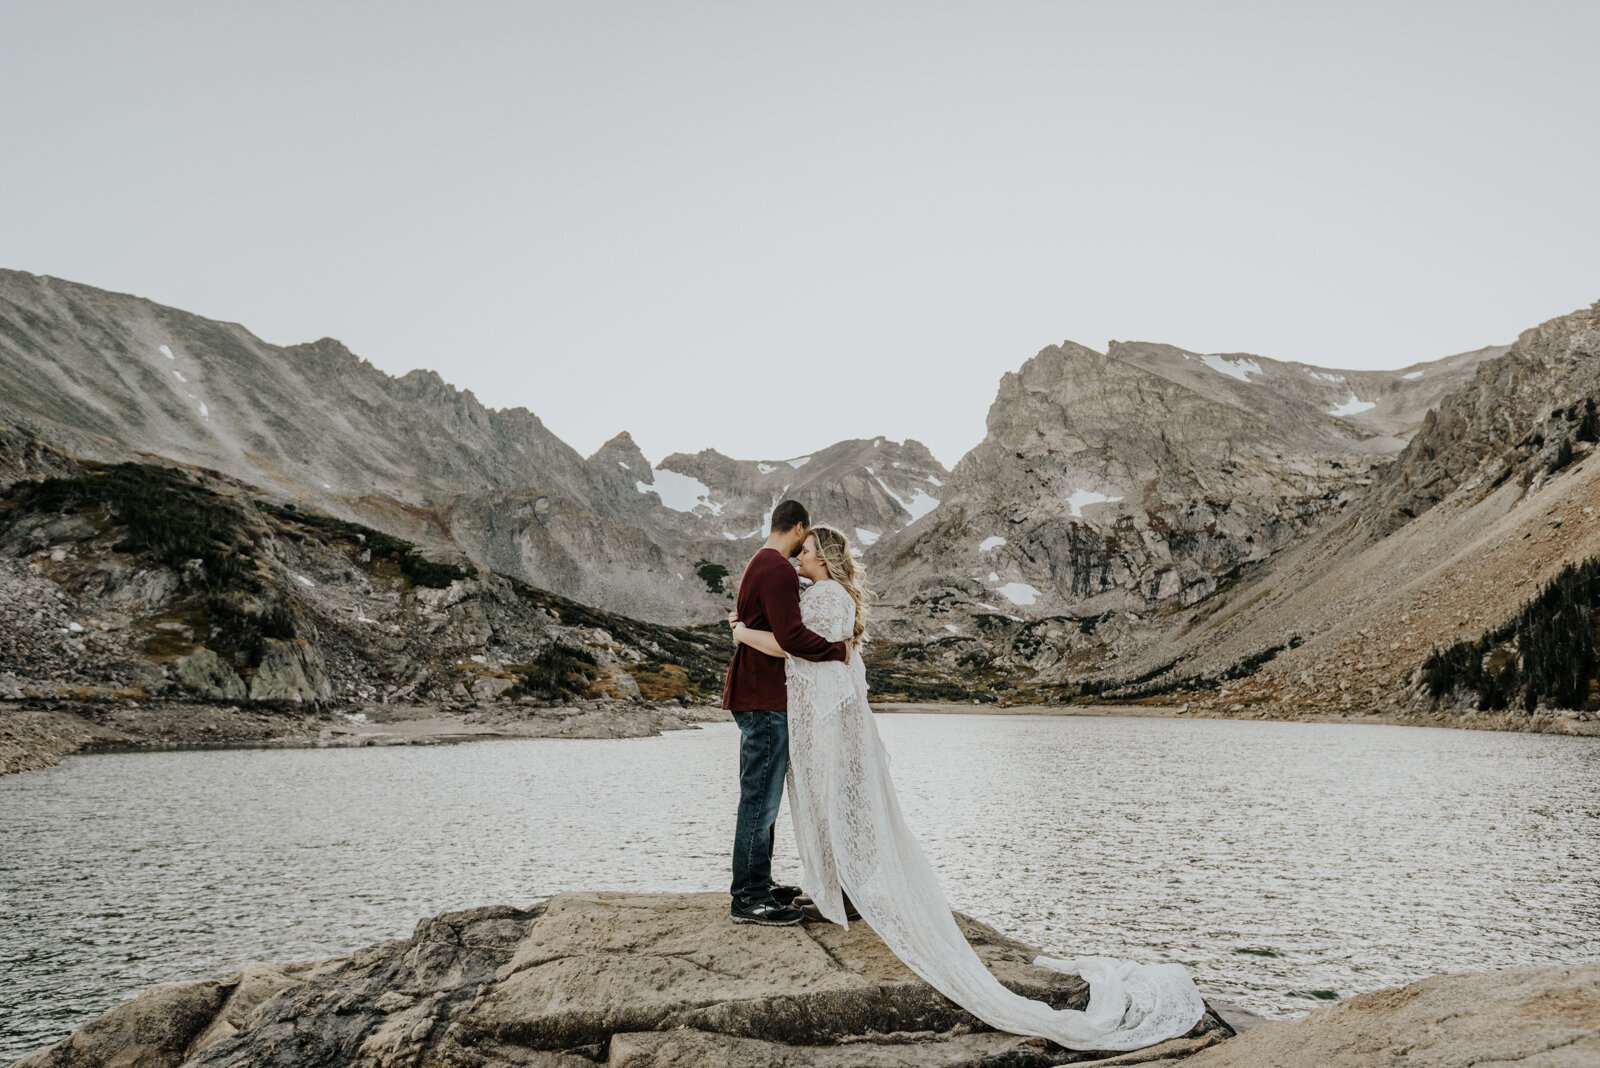 Indian Peaks Wilderness Area Wedding Photographer Colorado